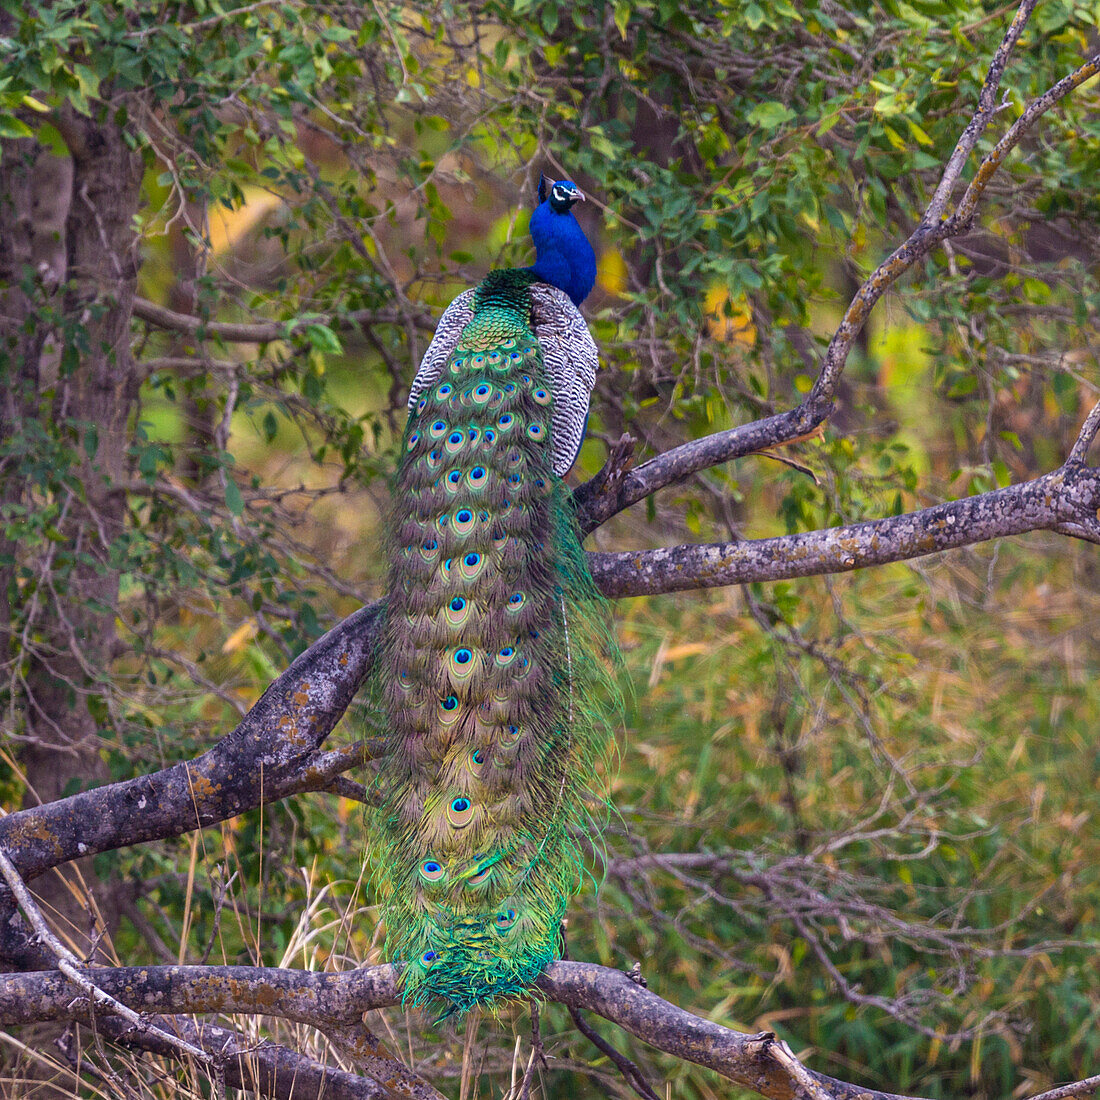 India. Peacock (Pavo cristatus) on display at Bandhavgarh Tiger Reserve.